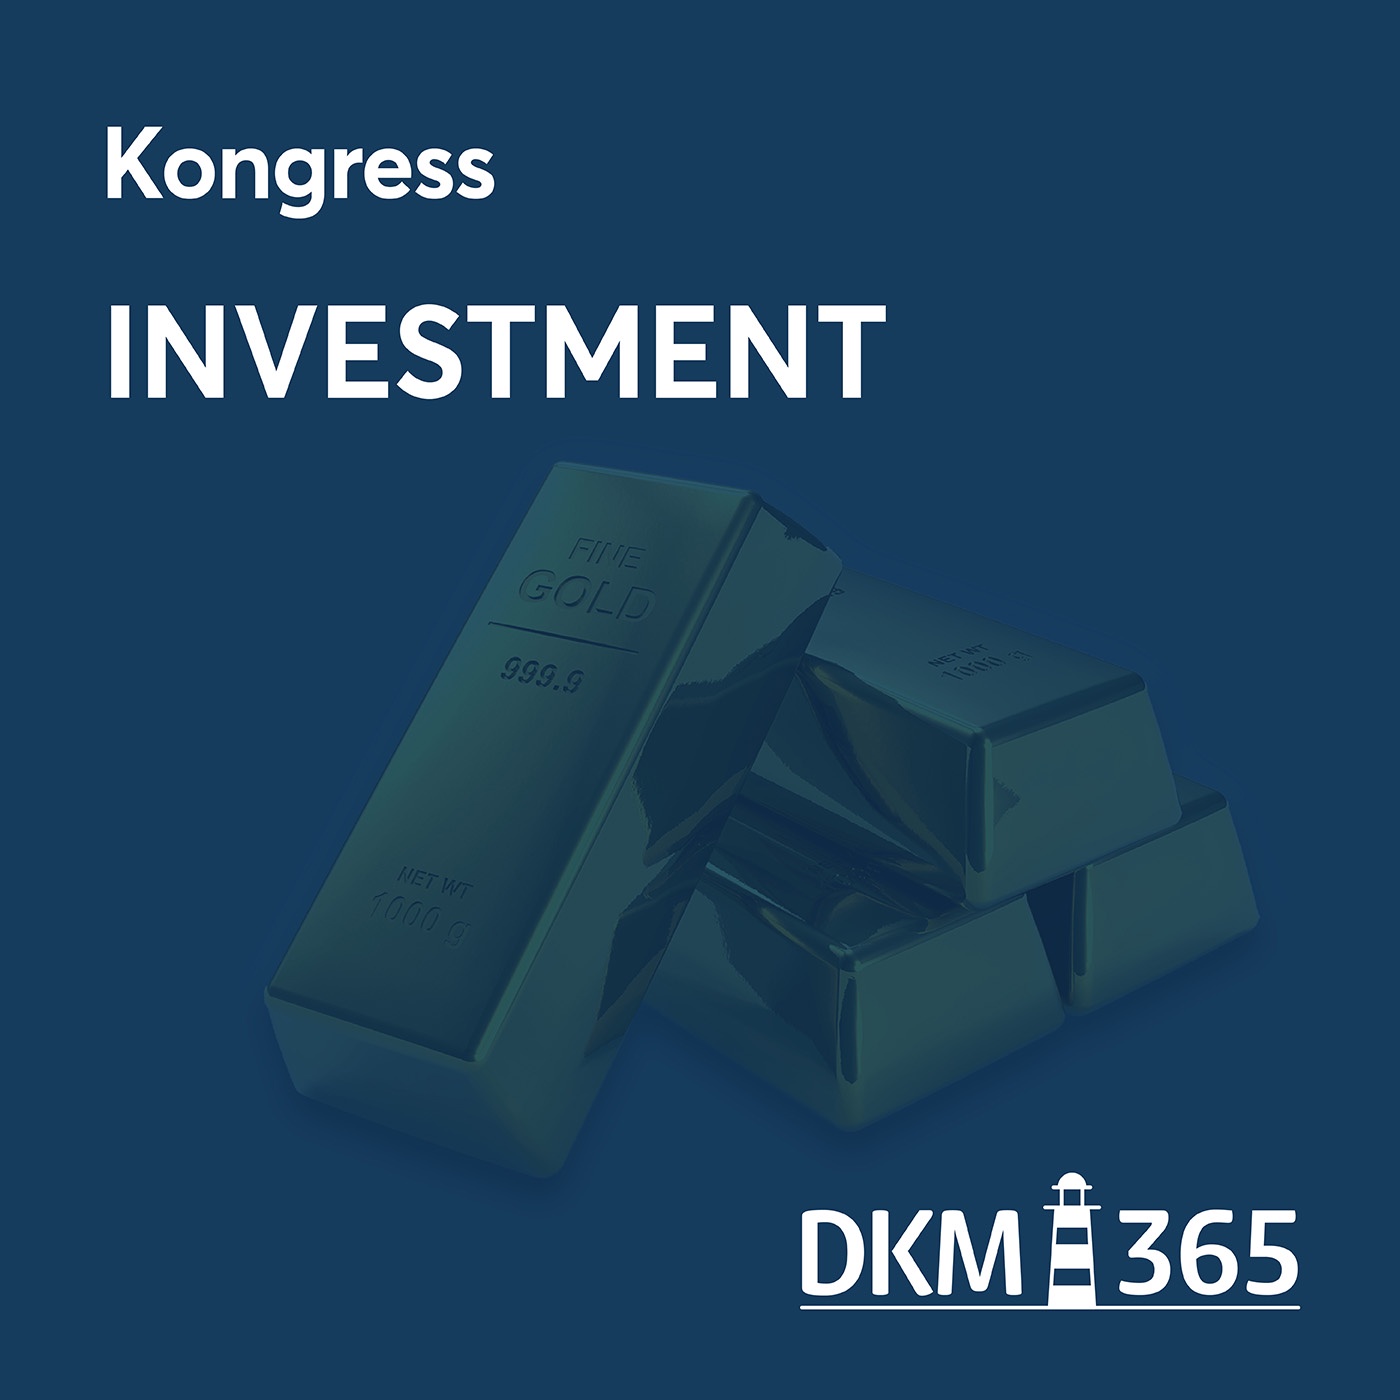 DKM OnStage - Kongress Investment mit Thomas Buchholz